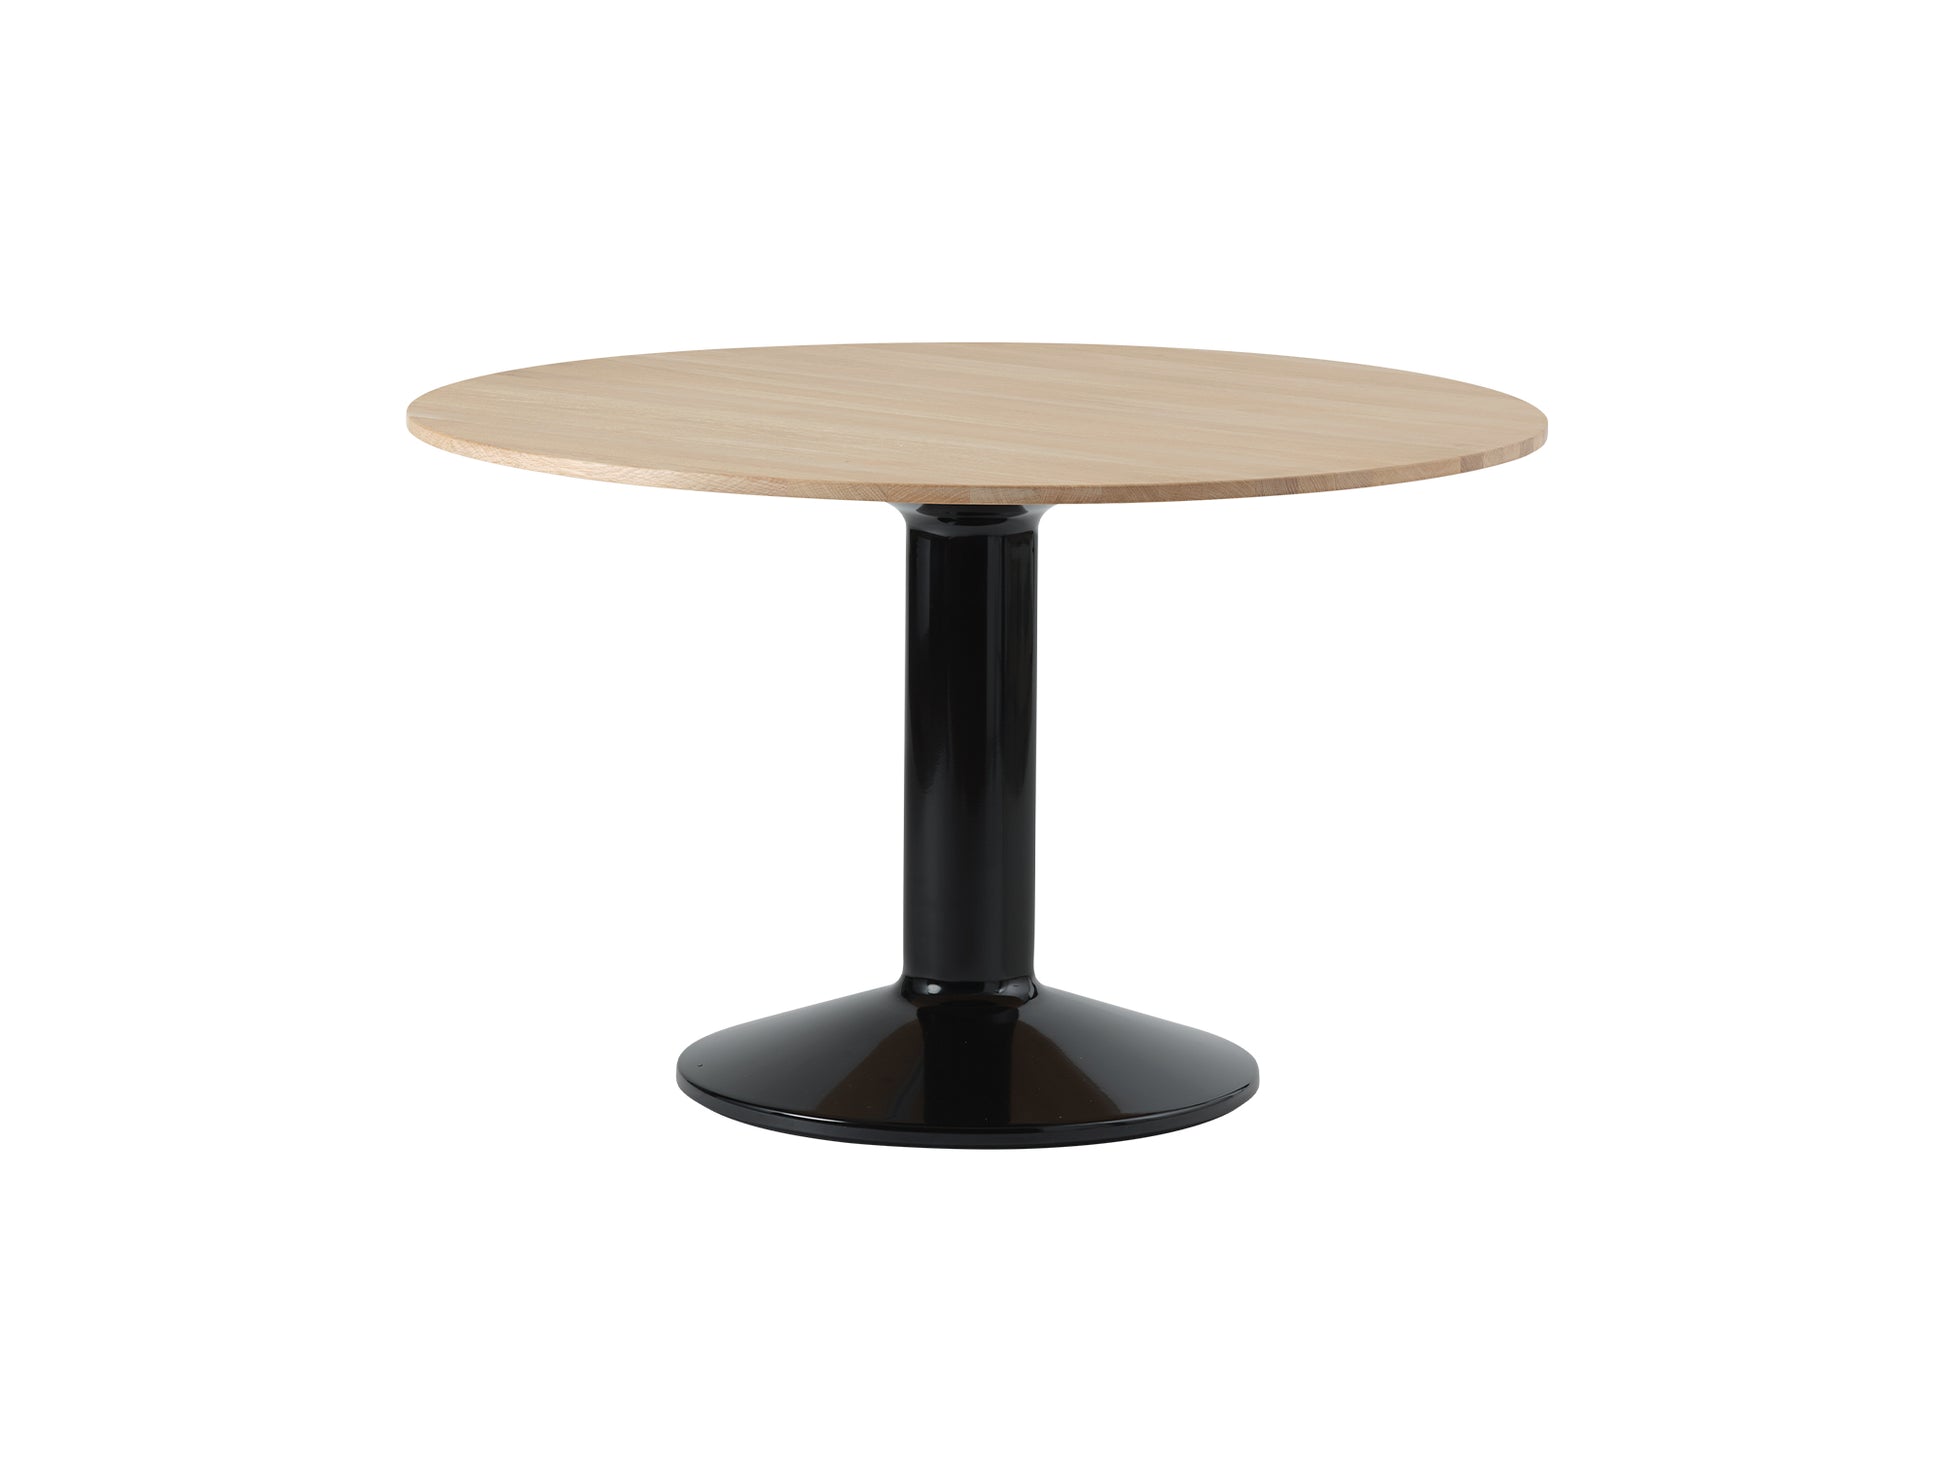 Midst Table by Muuto - Diameter: 120 cm / Oiled Oak Tabletop with Black Steel Base